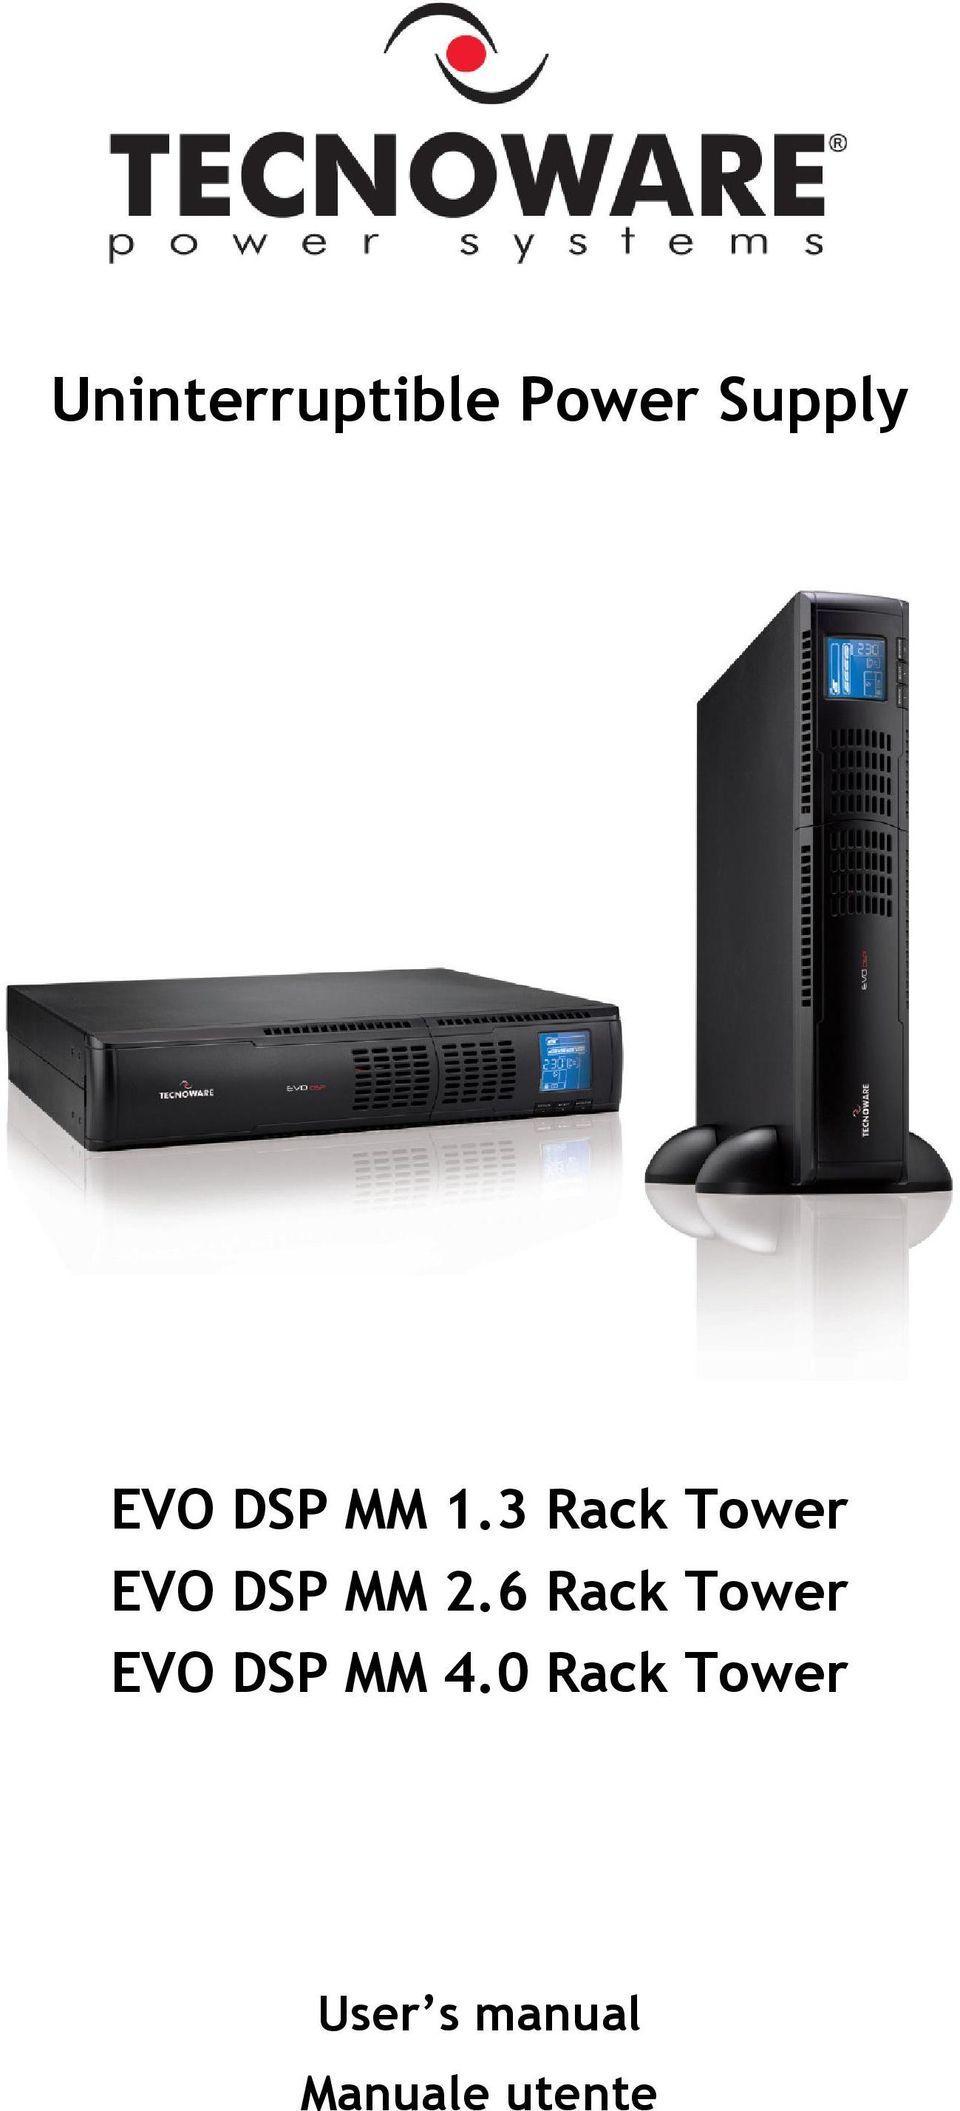 3 Rack Tower EVO DSP MM 2.